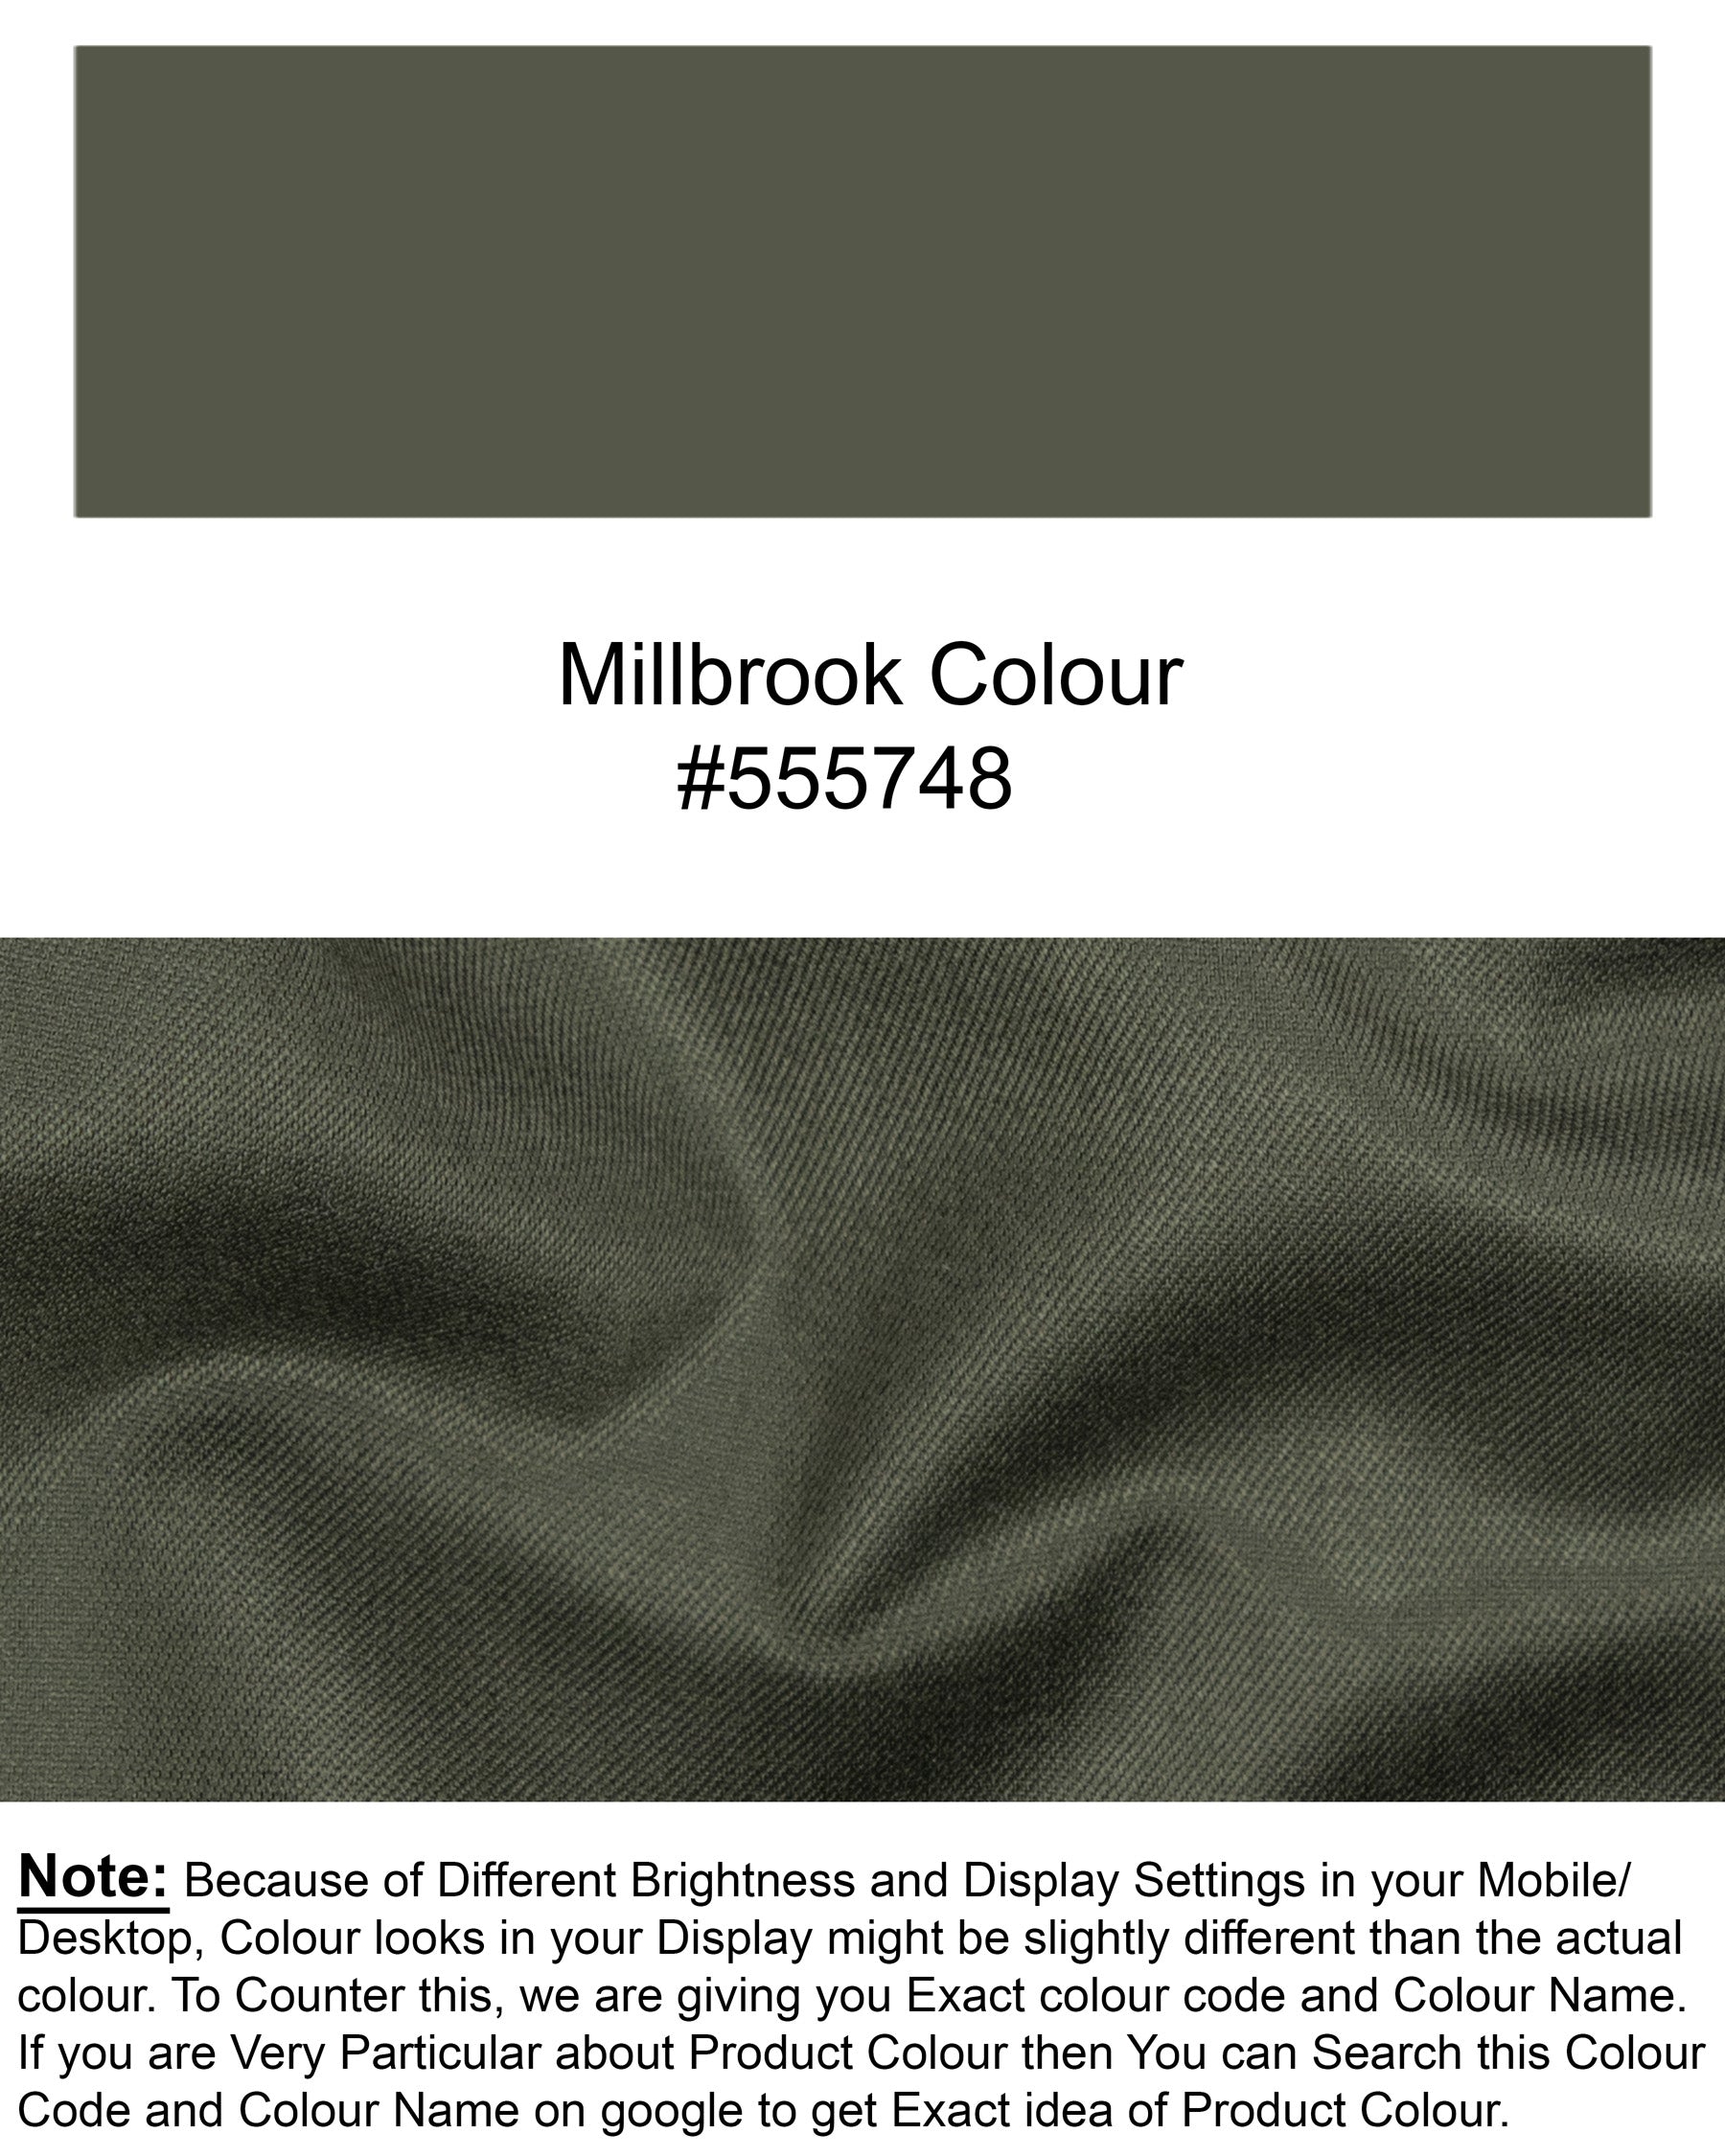 Millbrook Green Cross Buttoned Bandhgala/Mandarin Premium Cotton Blazer BL1297-CBG-36, BL1297-CBG-38, BL1297-CBG-40, BL1297-CBG-42, BL1297-CBG-44, BL1297-CBG-48, BL1297-CBG-46, BL1297-CBG-50, BL1297-CBG-52, BL1297-CBG-54, BL1297-CBG-56, BL1297-CBG-58, BL1297-CBG-60